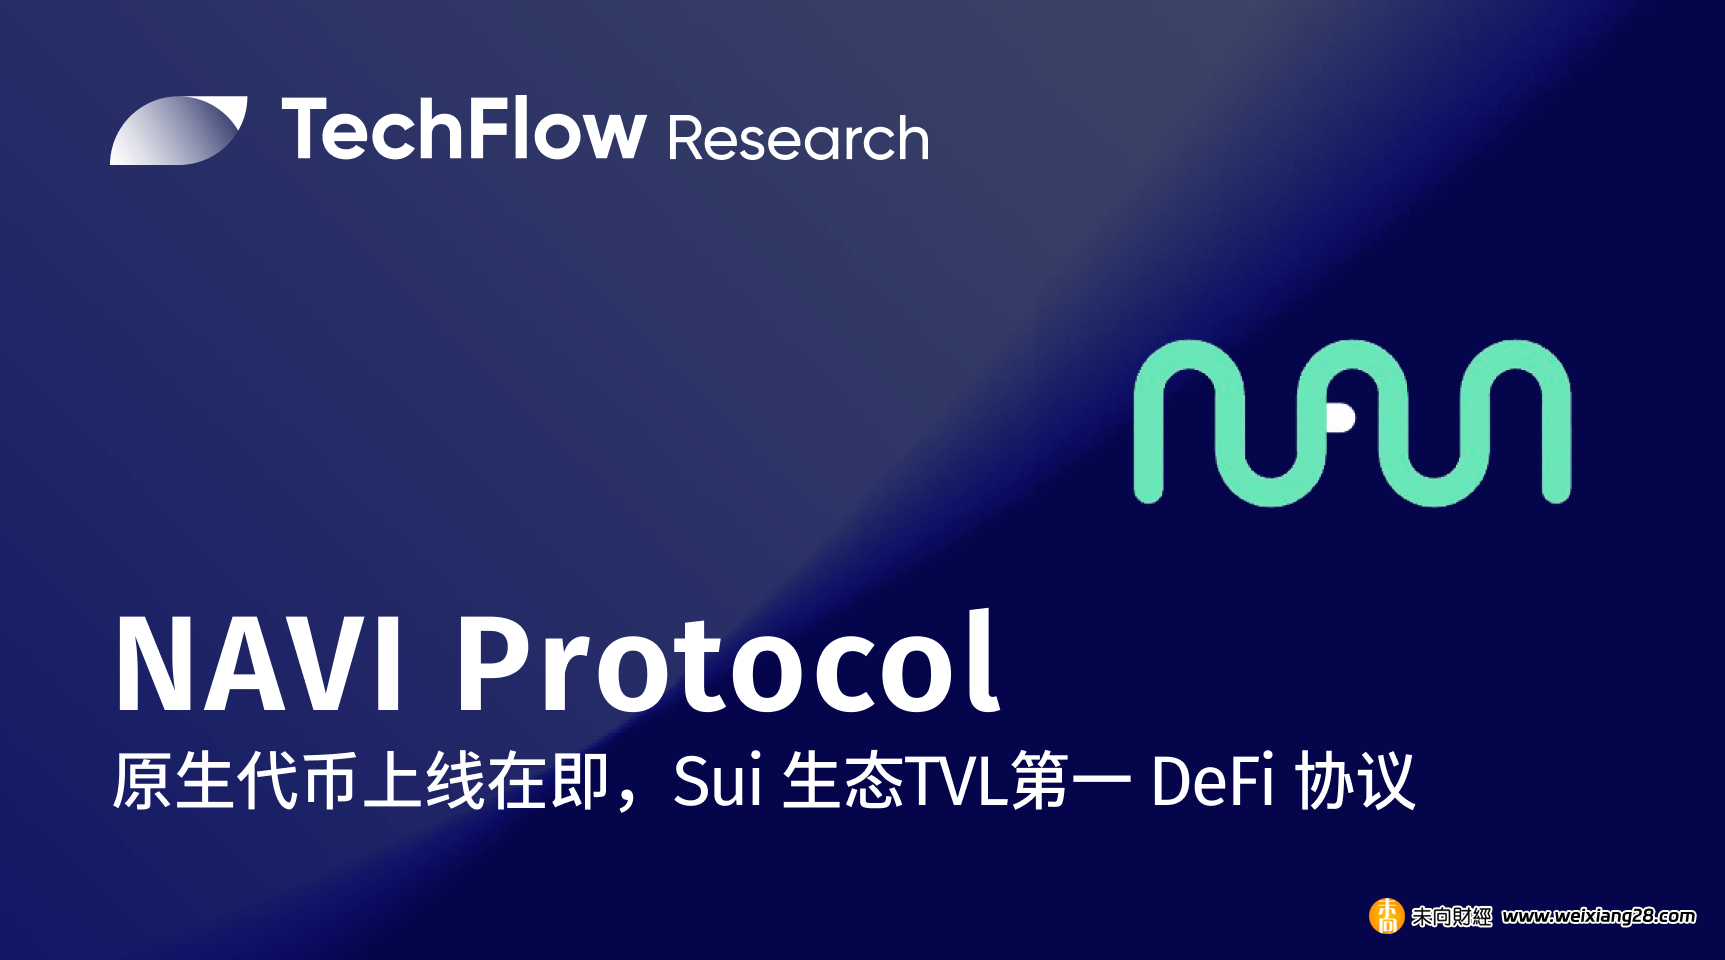 NAVI Protocol：原生代幣上線在即，Sui 生態 TVL 第一的龍頭 DeFi 協定插图